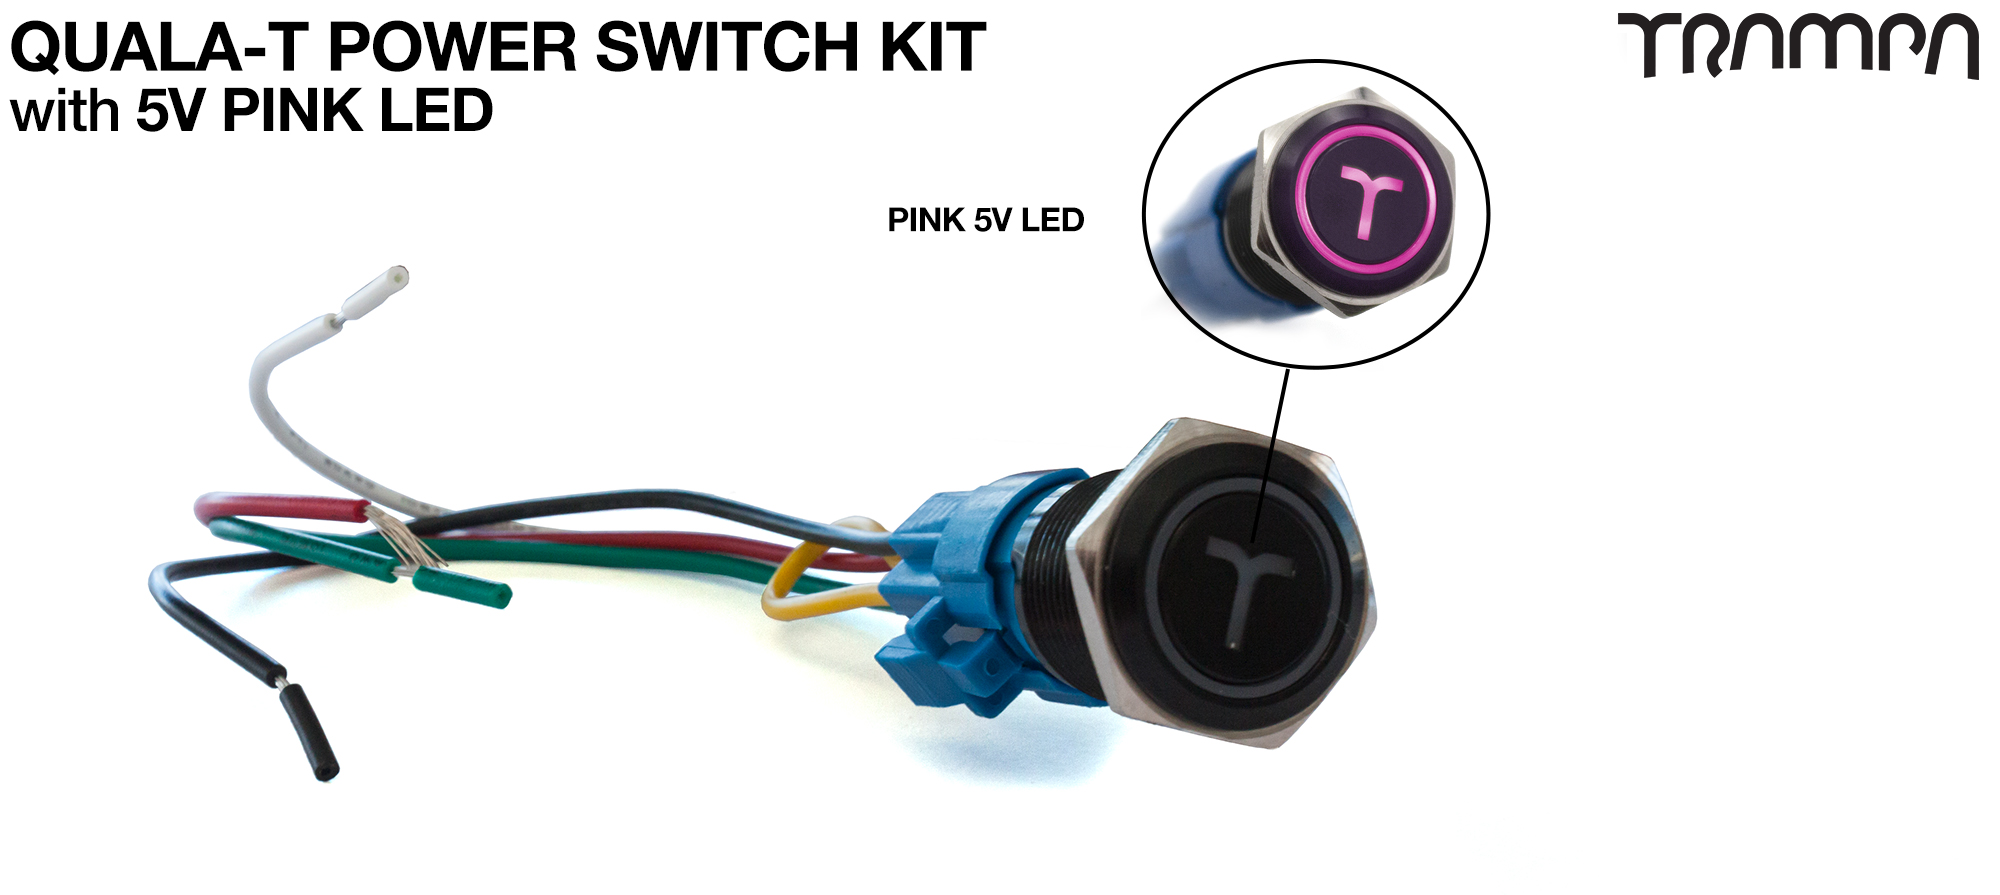 Yes please Add 1x PINK/PURPLE Power Switch (+£7.50)